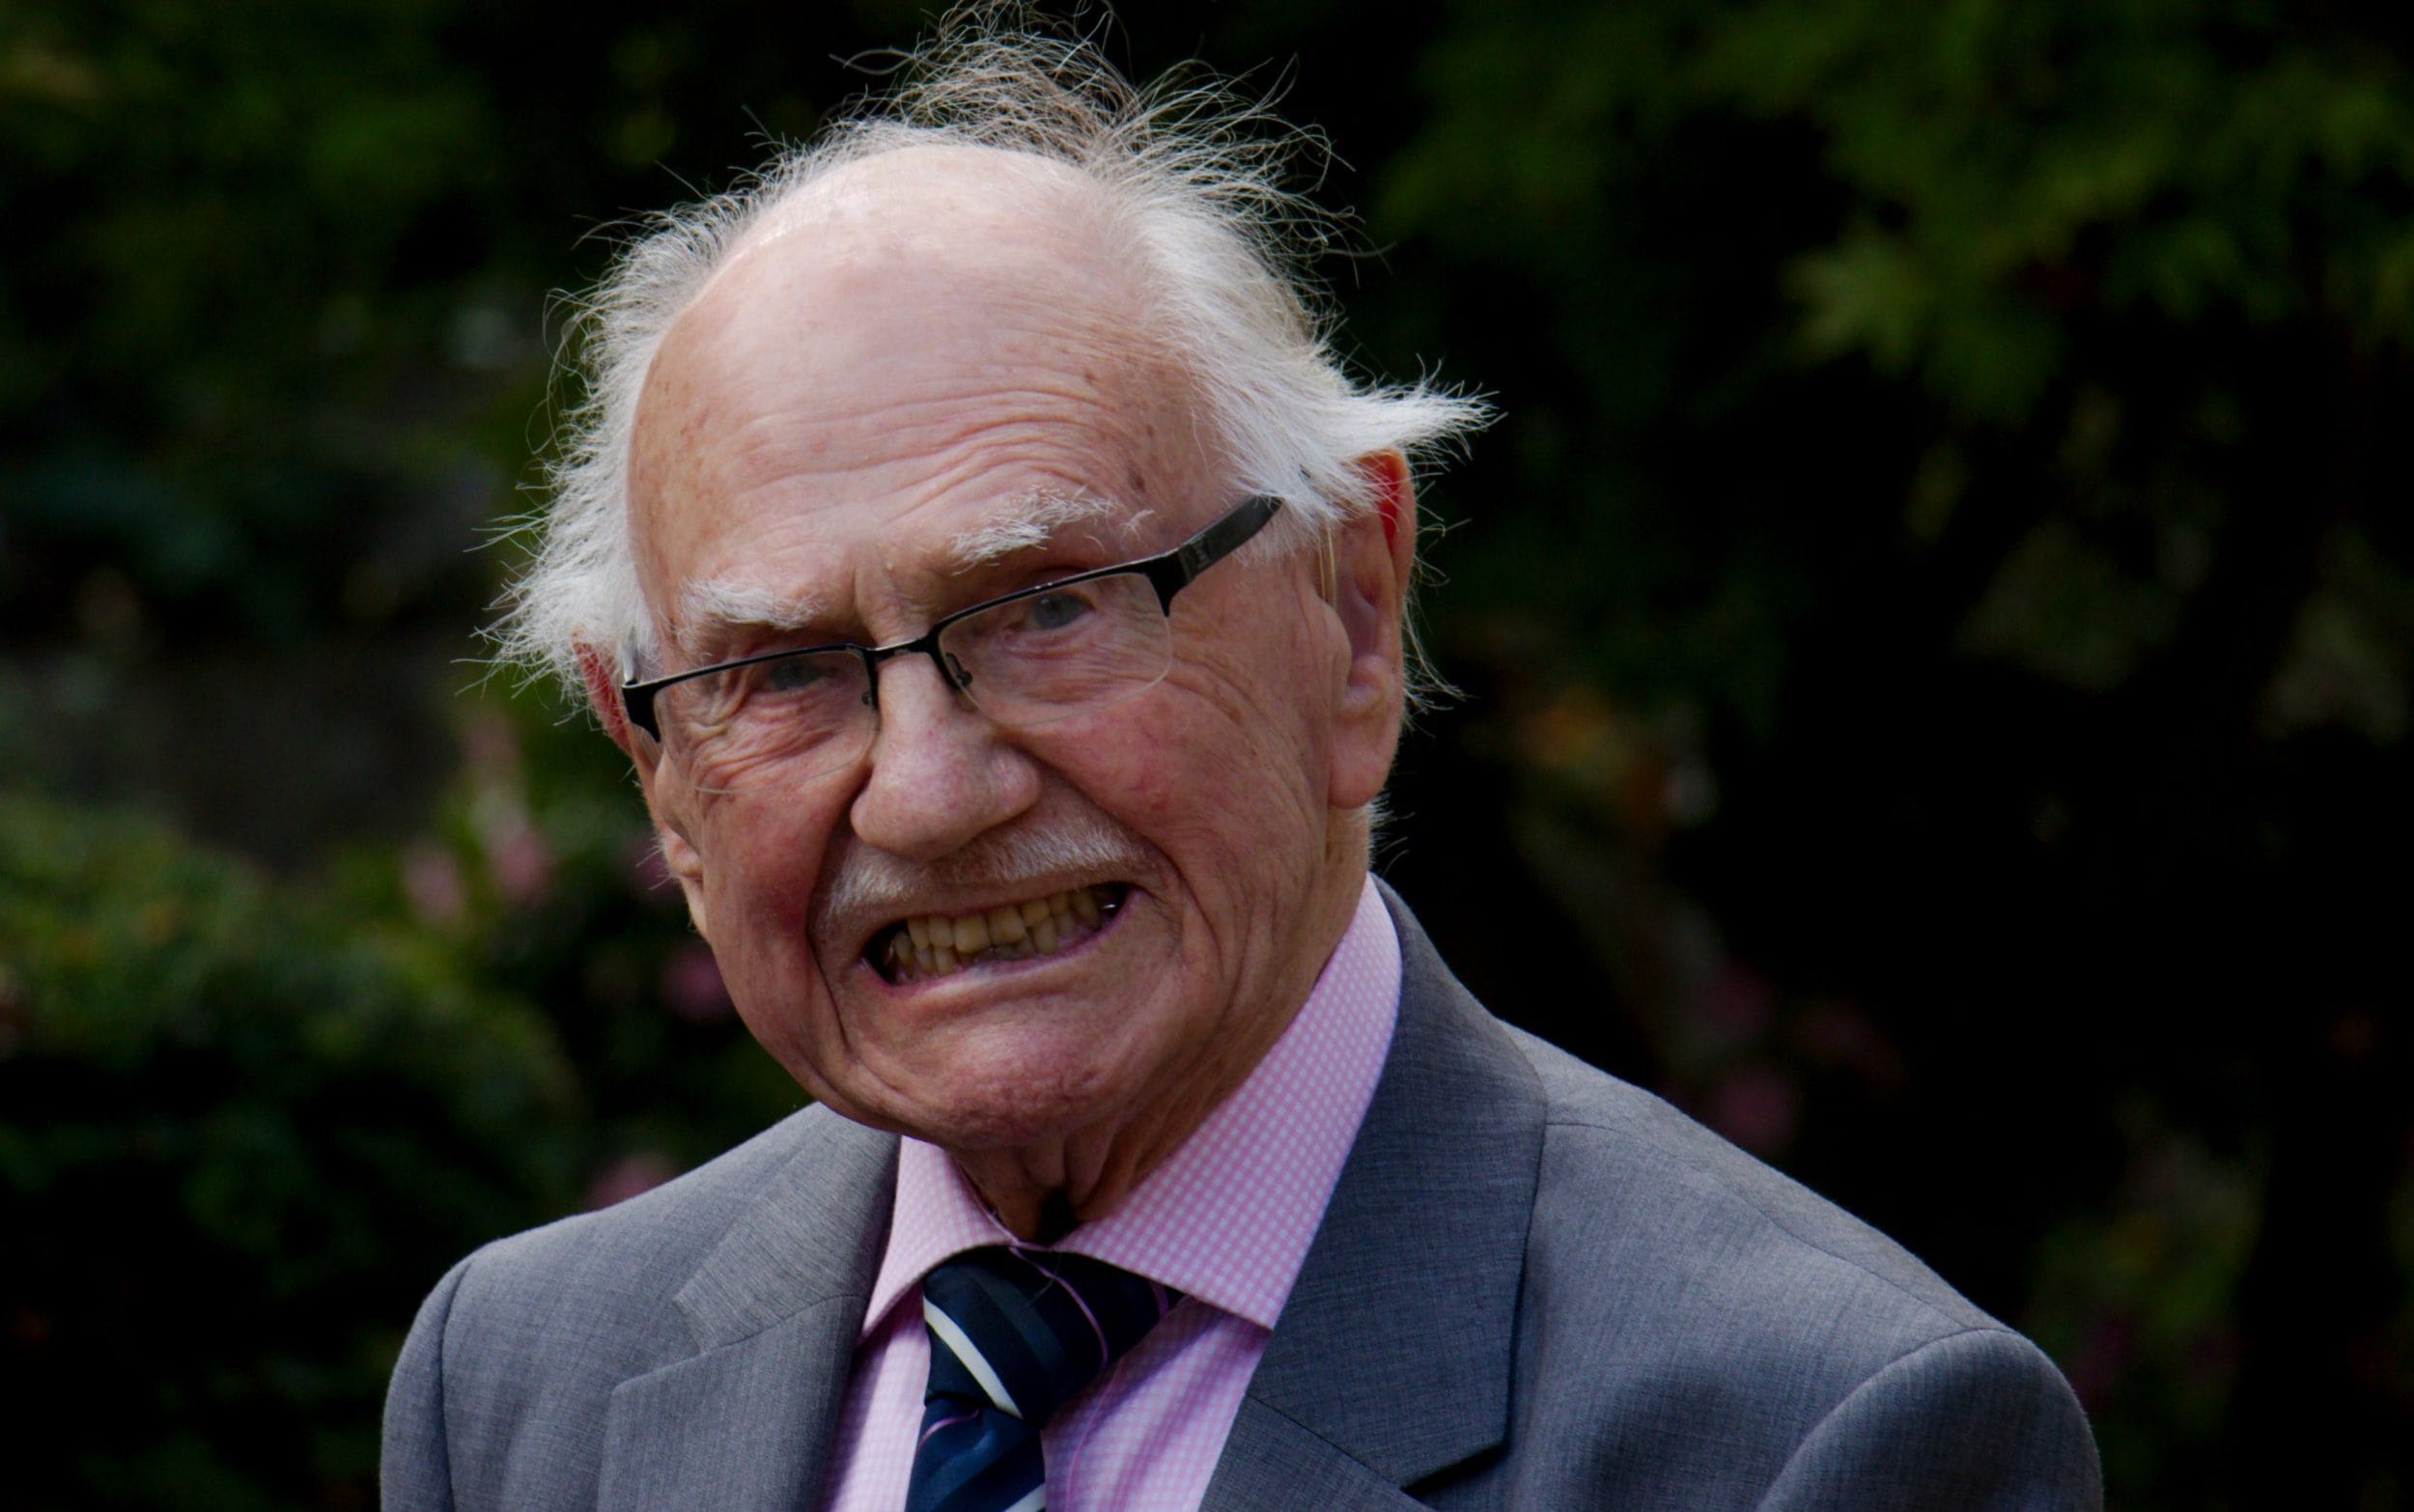 reginald woolgar, raf gunner who ditched at sea and narrowly escaped king david hotel bomb – obituary